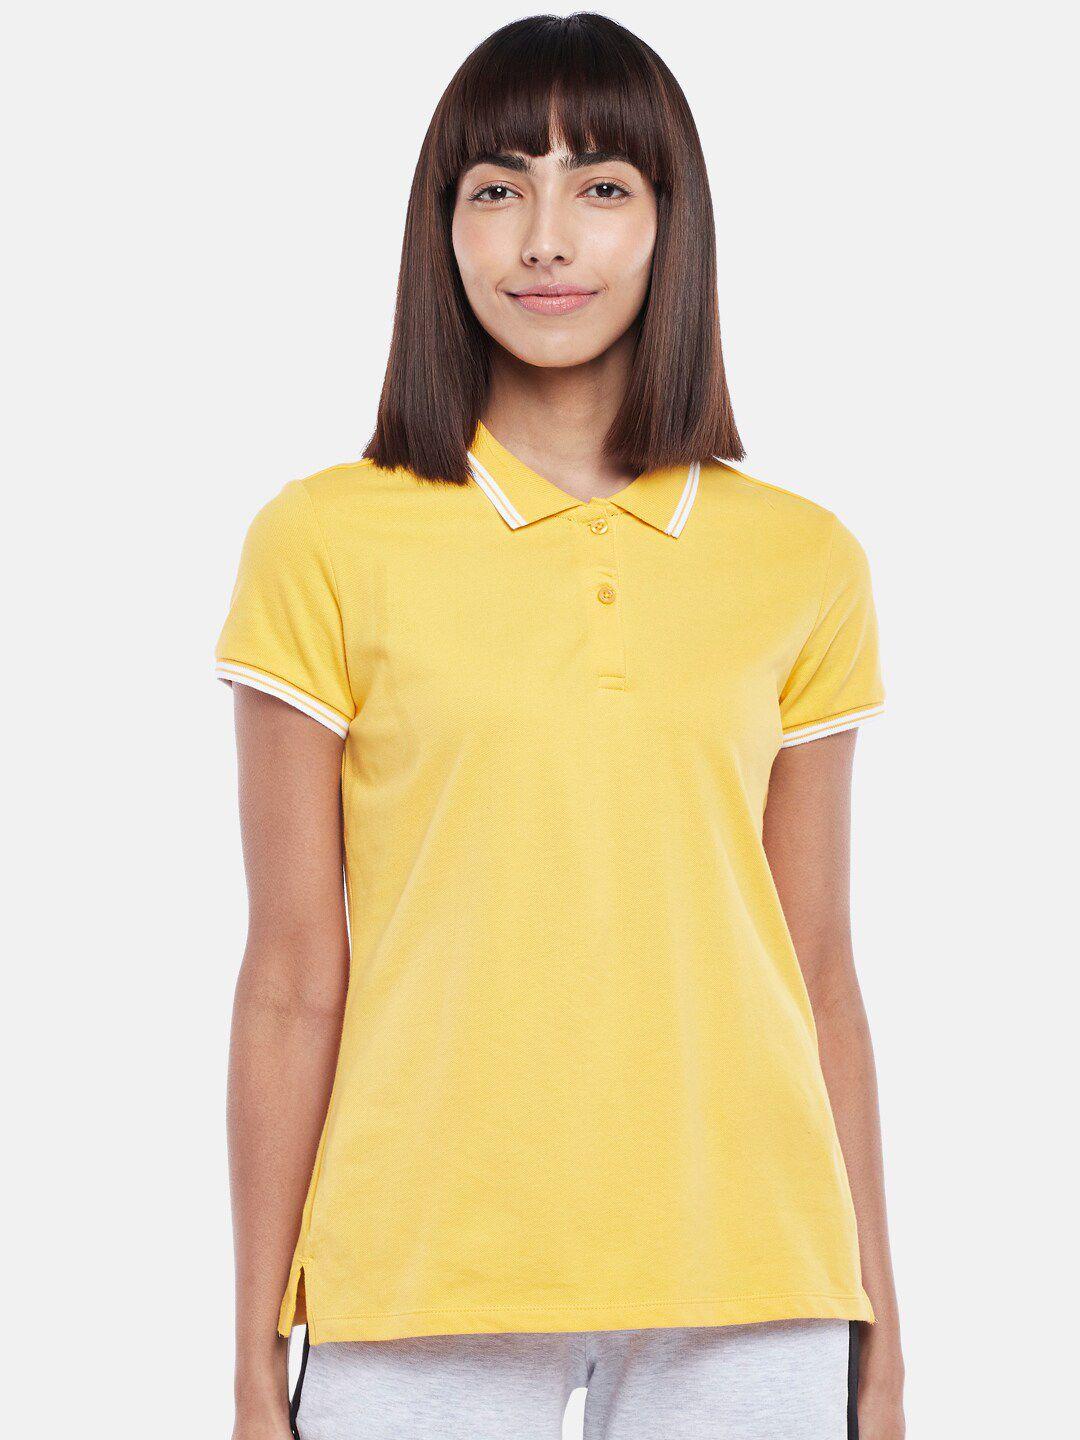 ajile-by-pantaloons-women-yellow-t-shirt